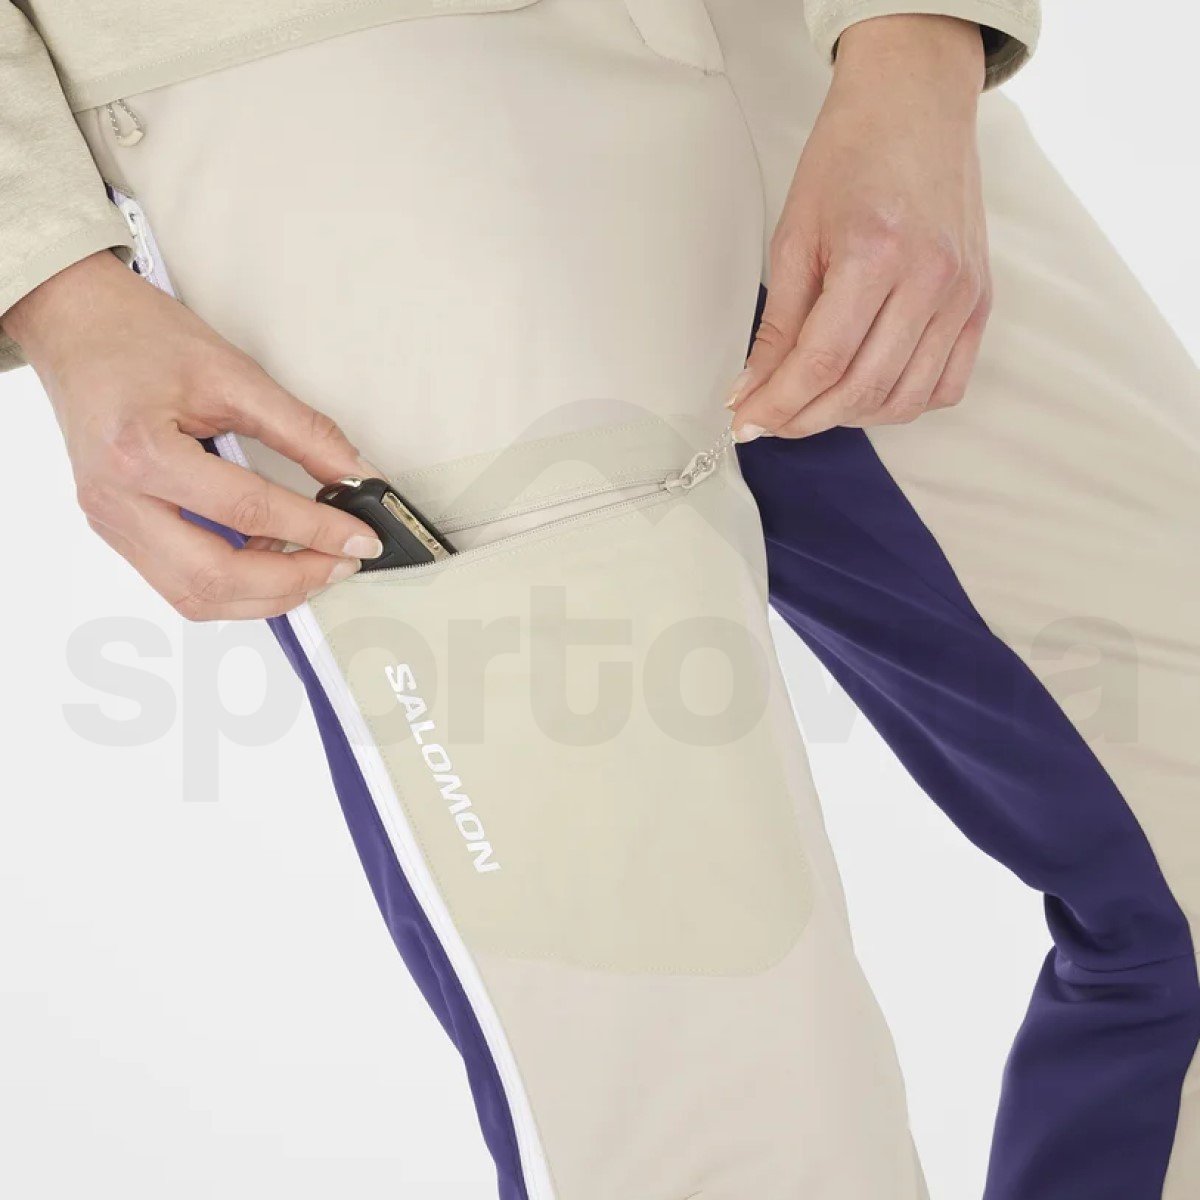 Kalhoty Salomon MTN GTX® Softshell Pant W - bílá/modrá